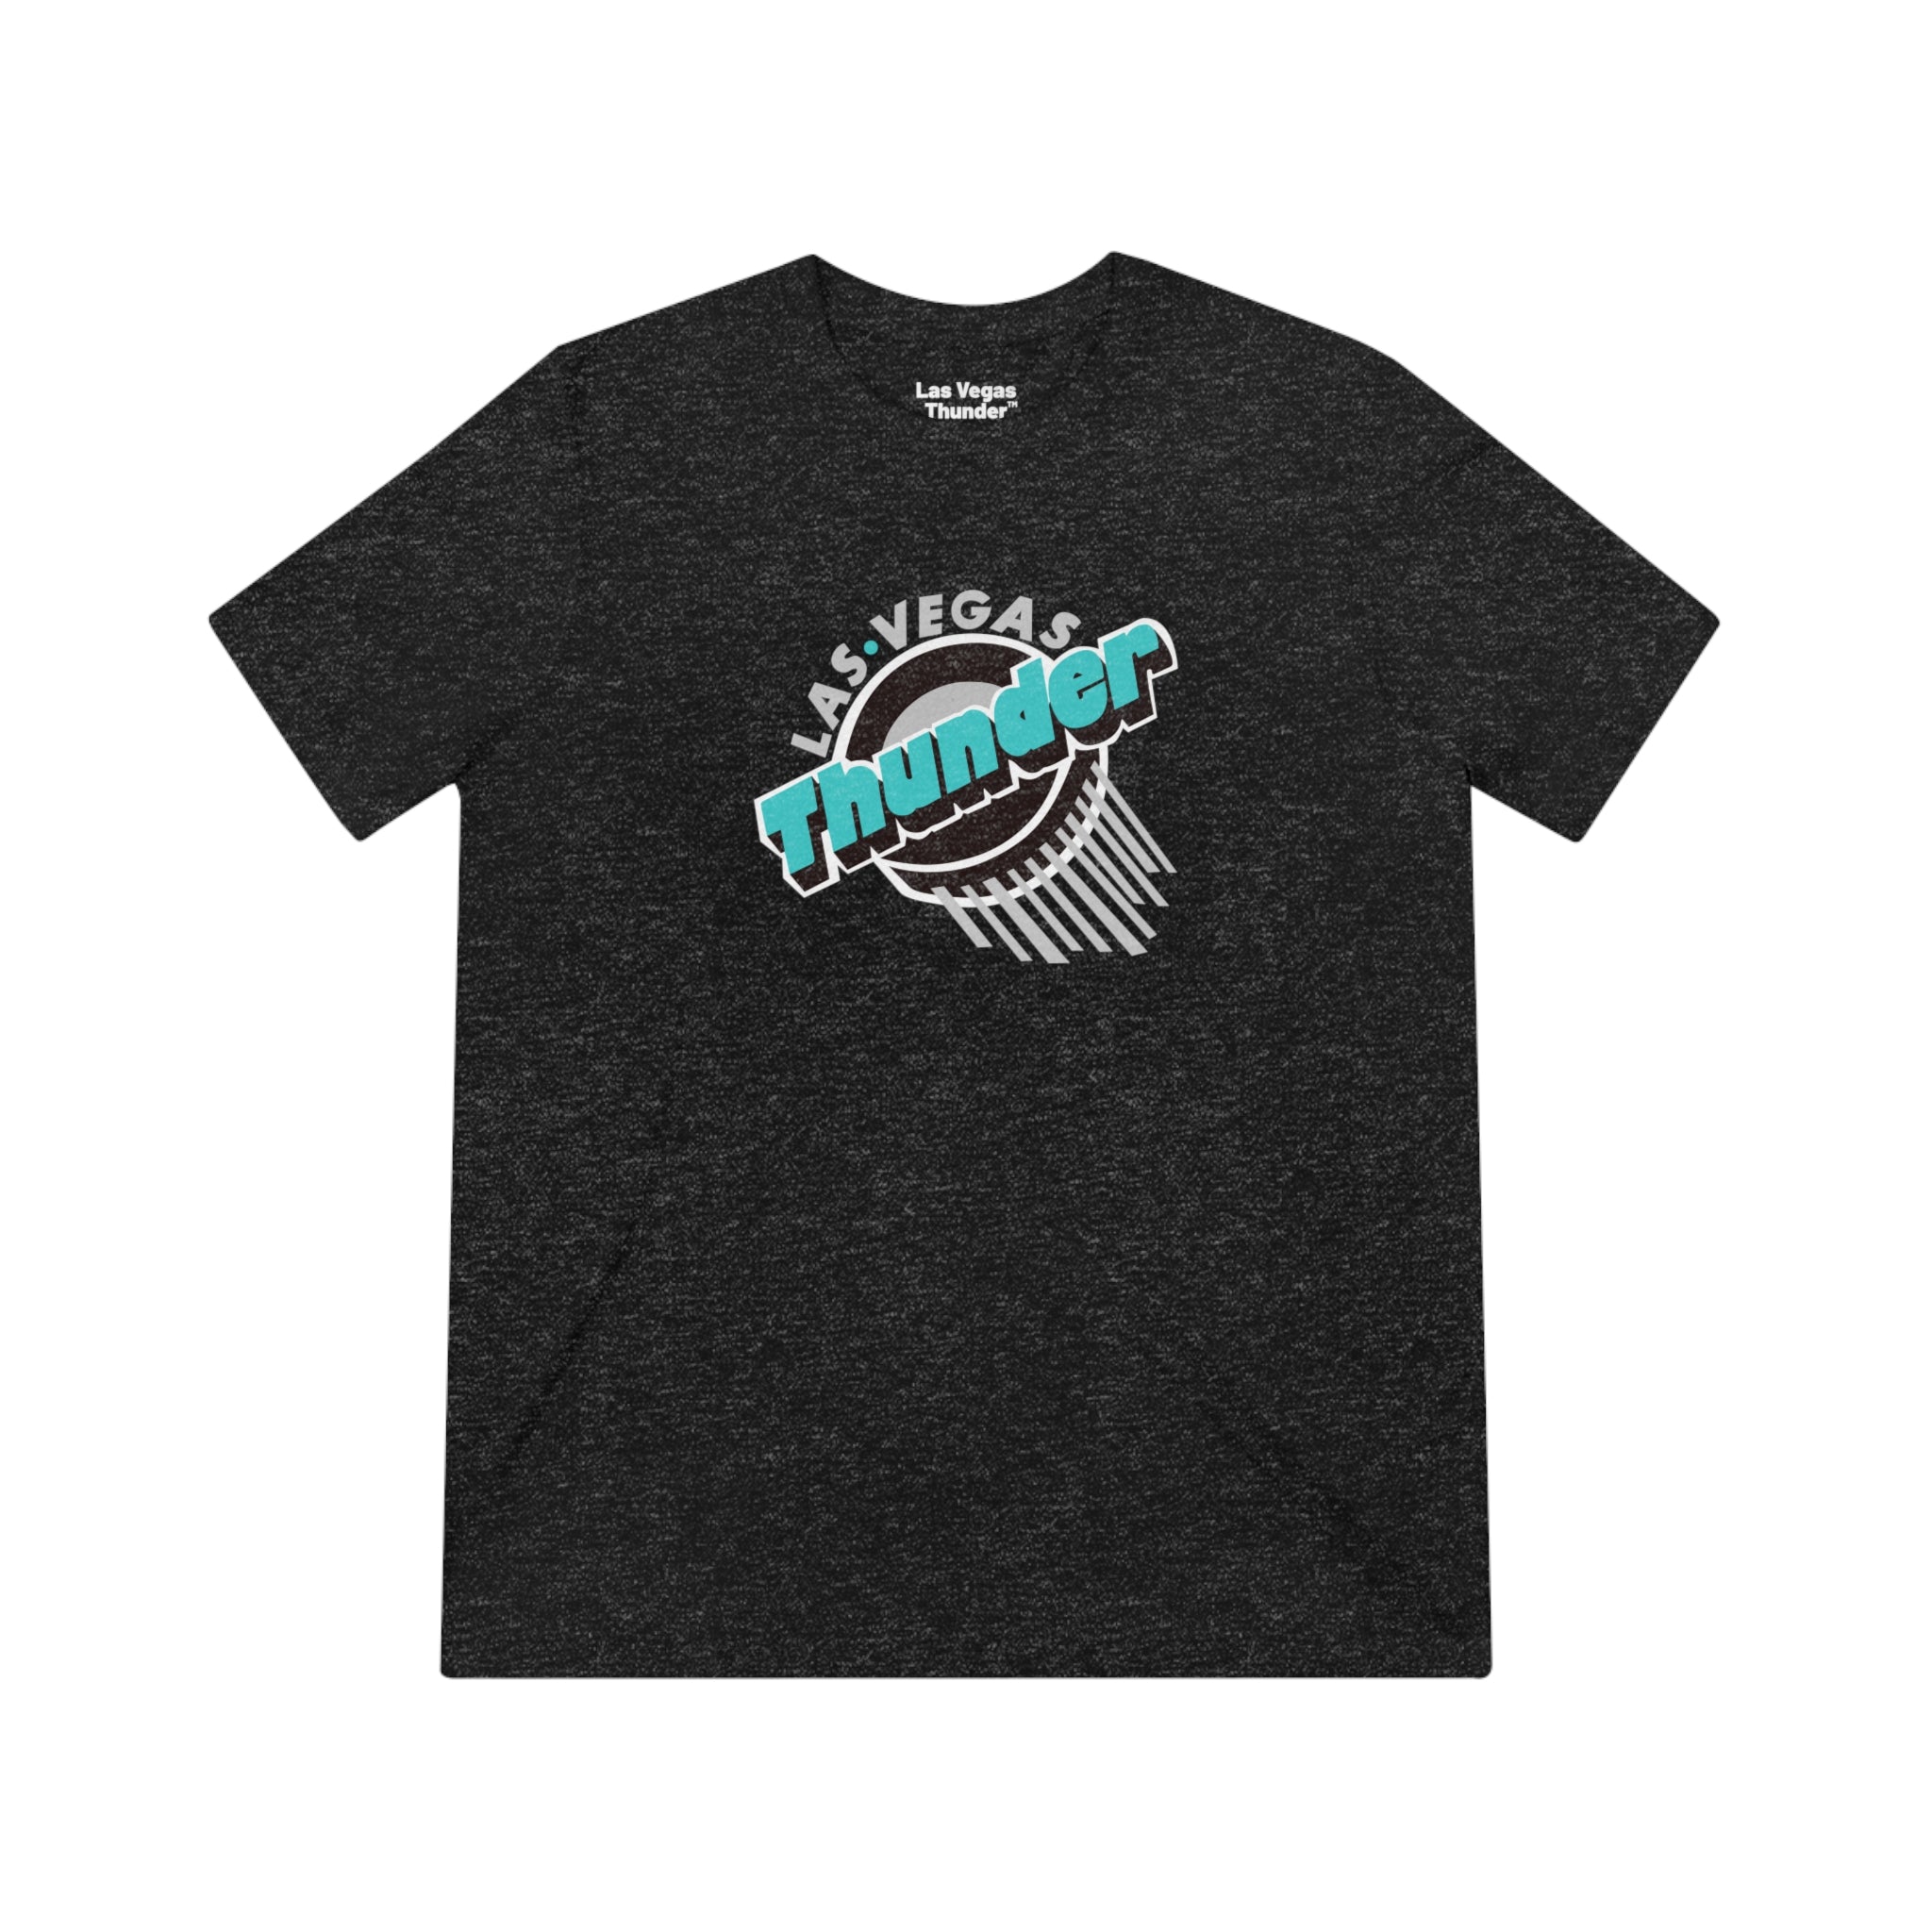 Las Vegas Thunder™ Puck T-Shirt (Tri-Blend Super Light)